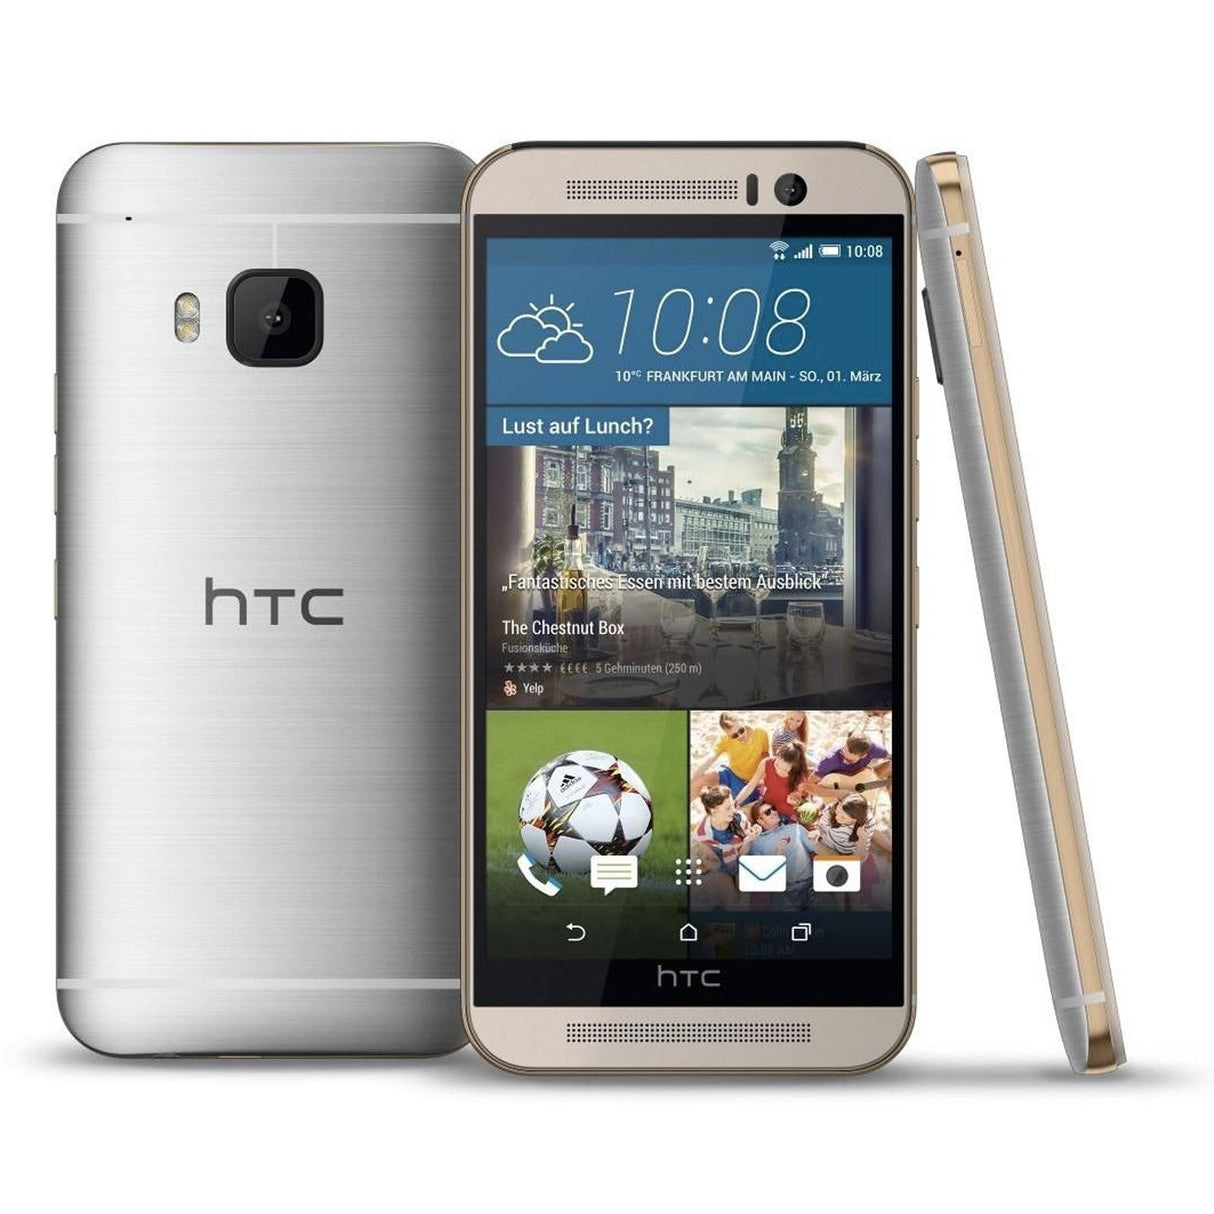 HTC One M9 - 32 GB - Silver/Gold - Verizon - CDMA/GSM